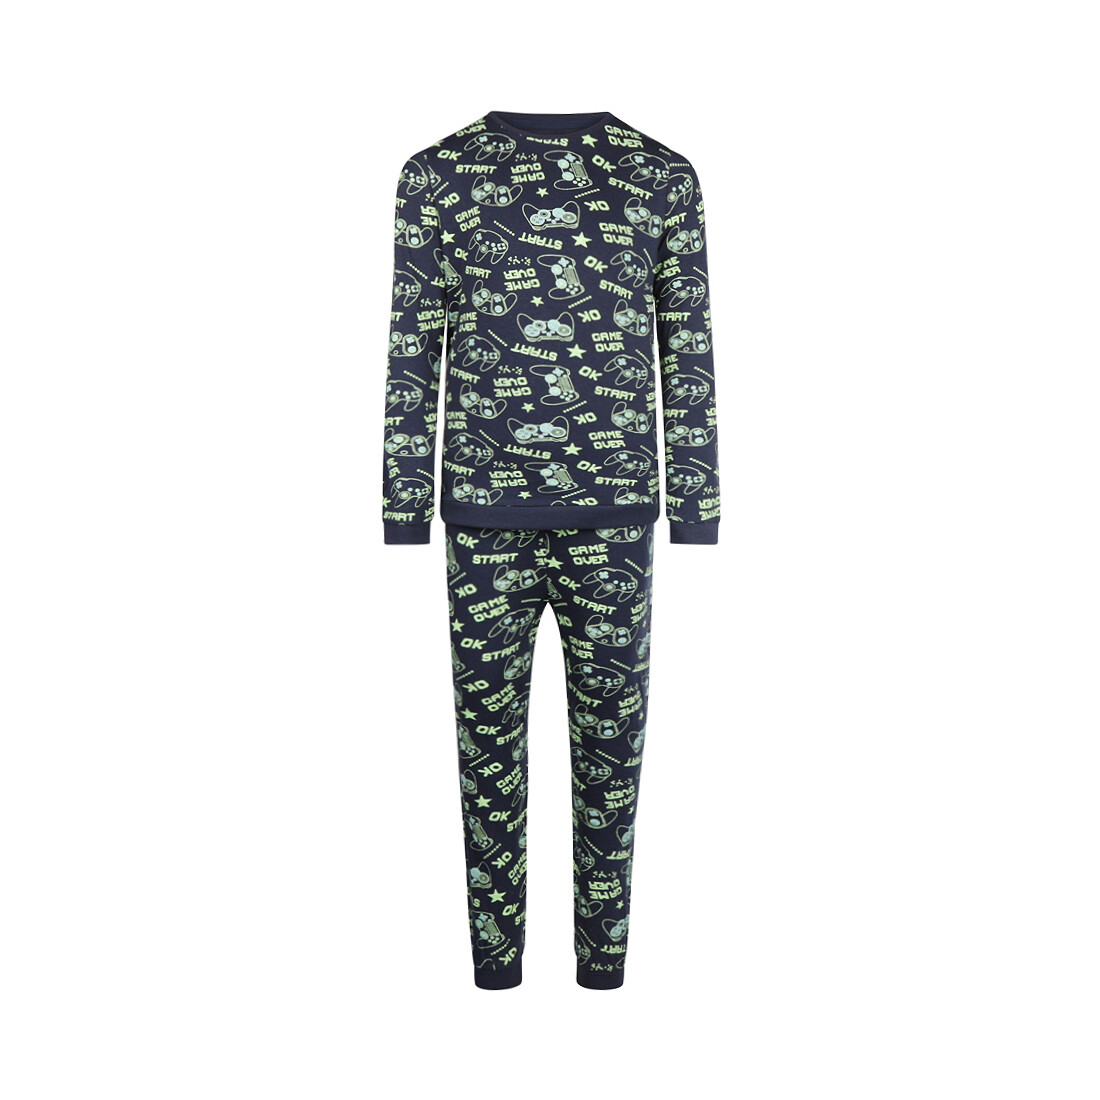 jongens Pyjama Set S49079-42 Navy Charlie Choe